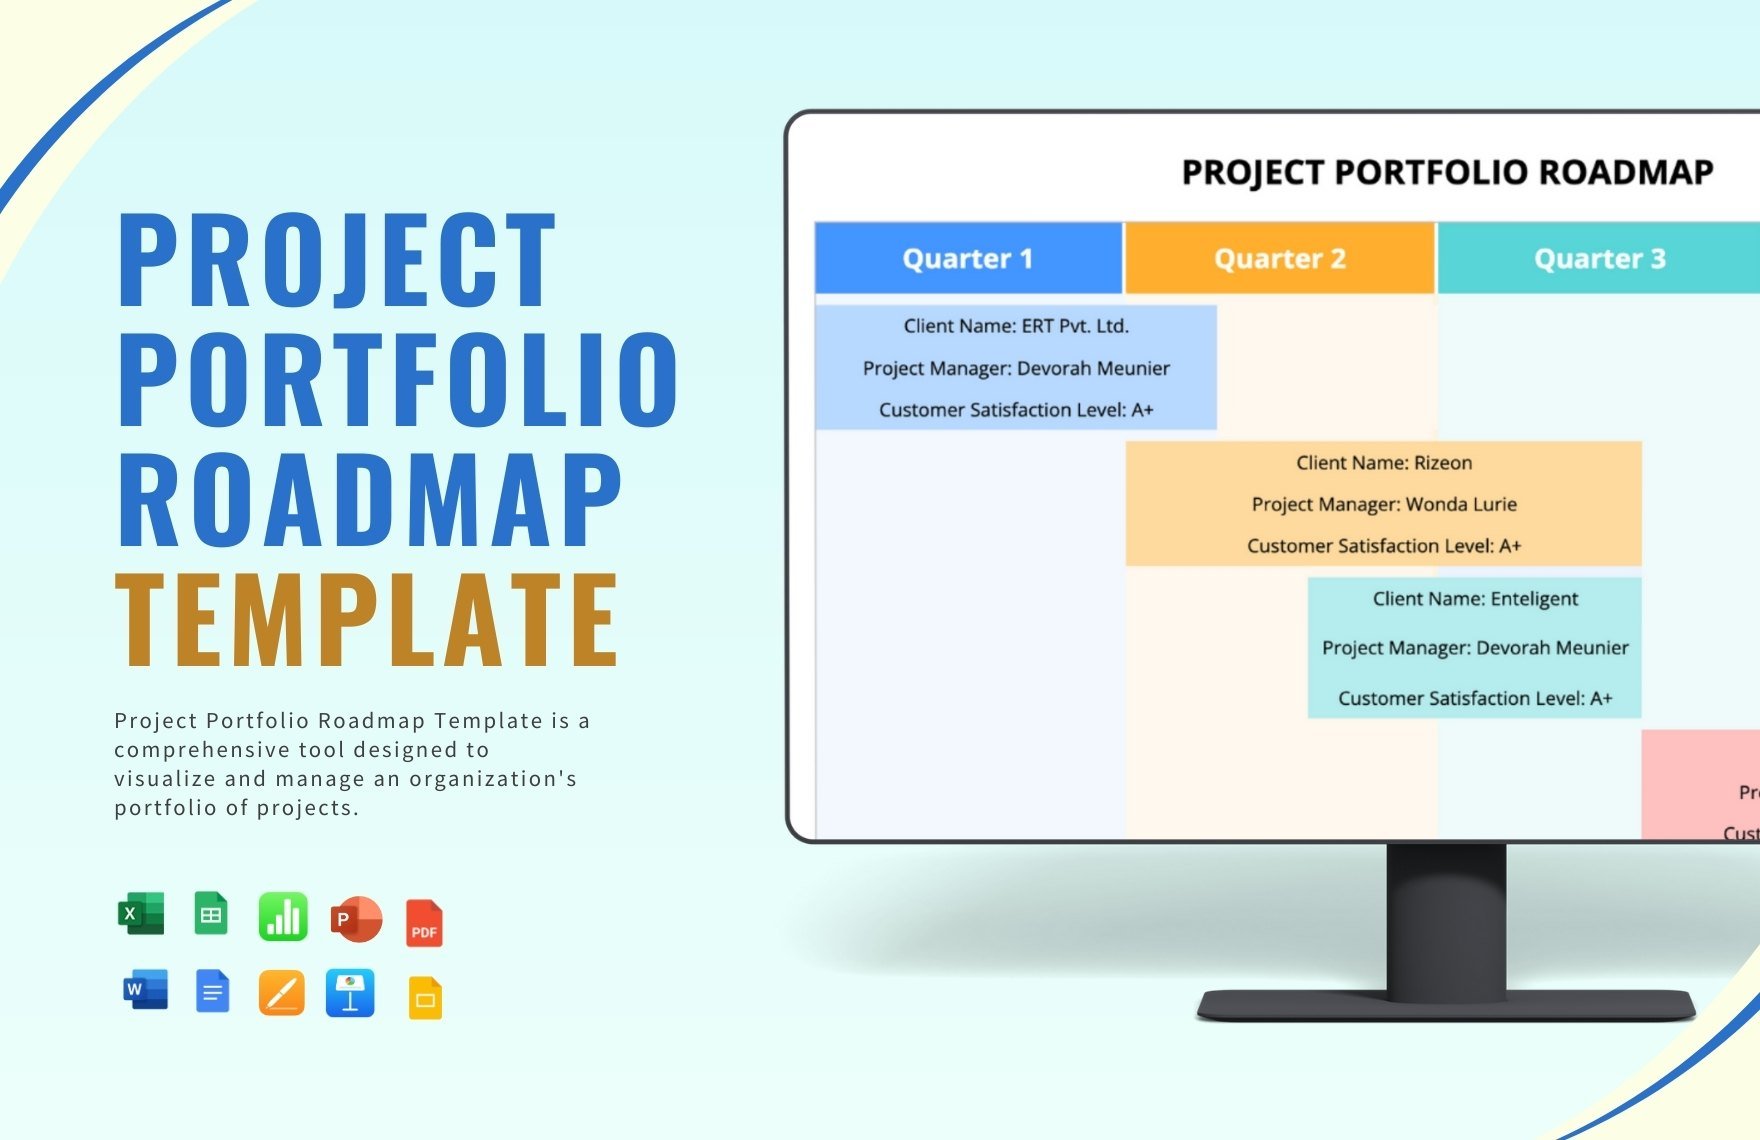 Project Portfolio Roadmap Template